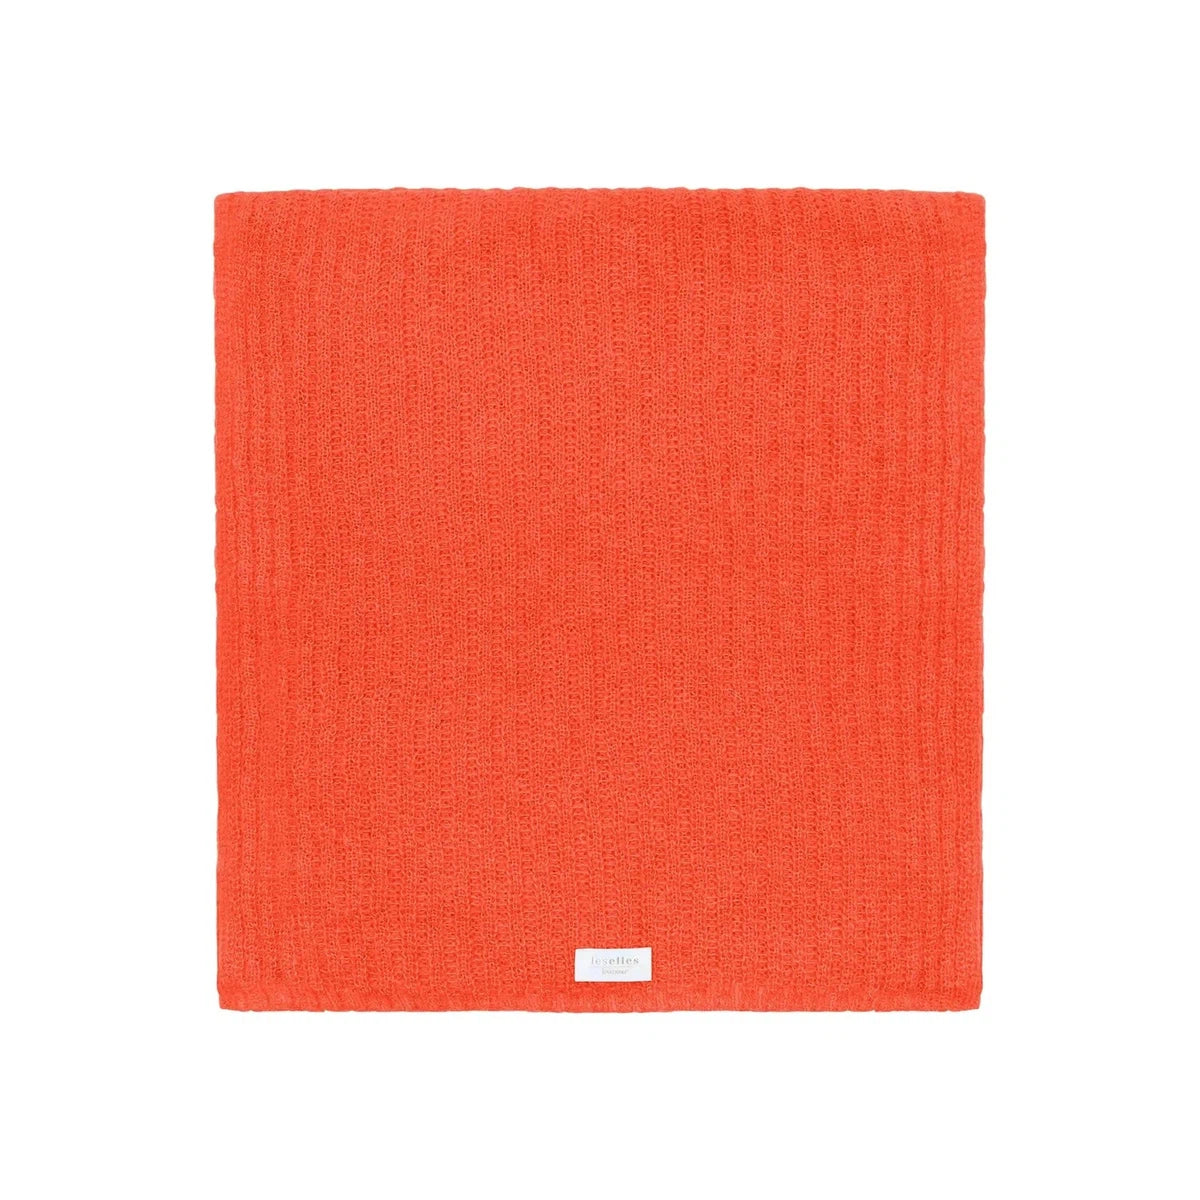 Caroline Neon Orange Sjaal